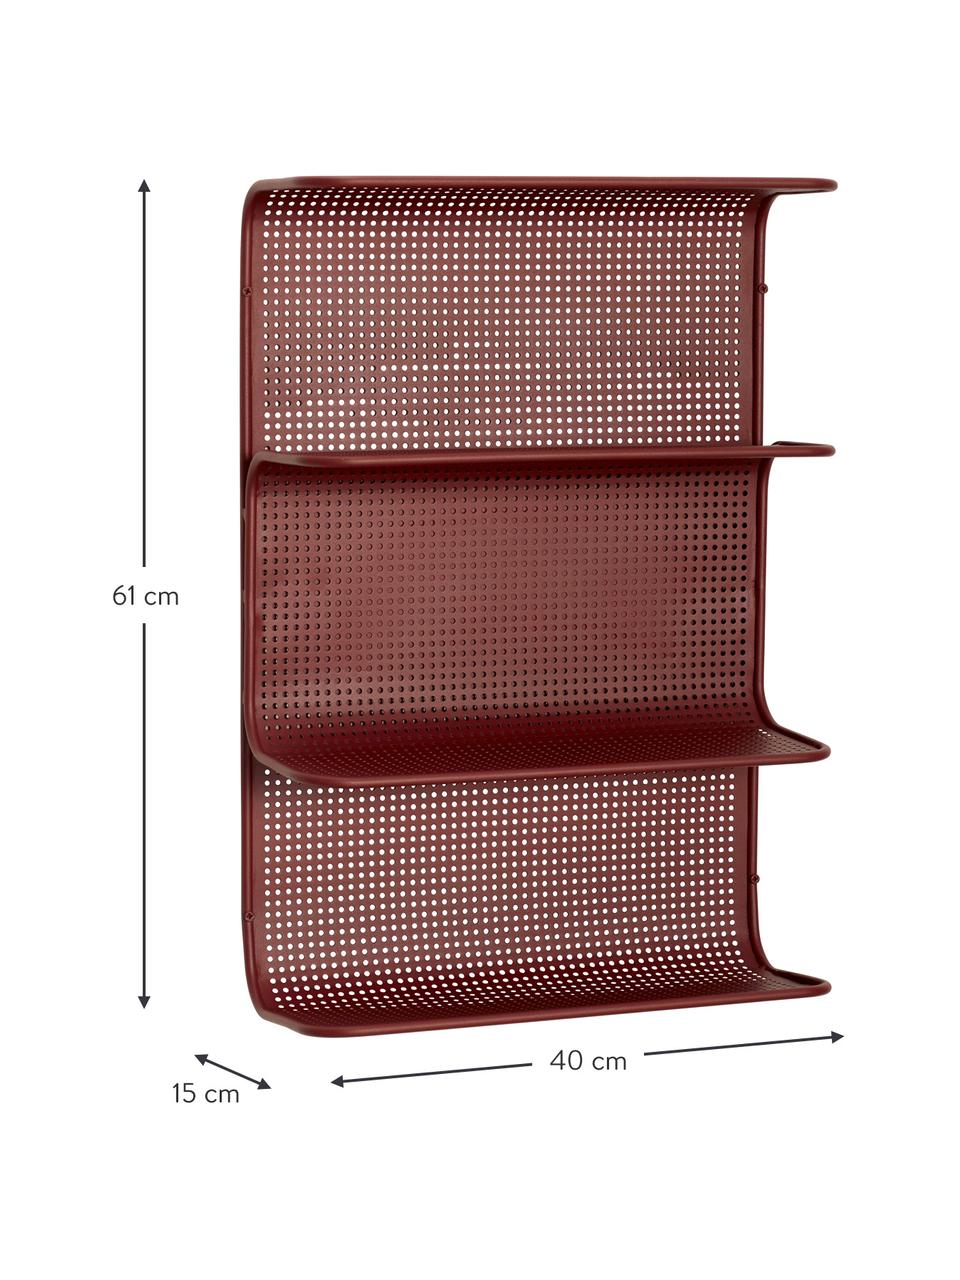 Kovová nástěnná police Grid, Potažený kov, Tmavě červená, Š 40 cm, V 61 cm